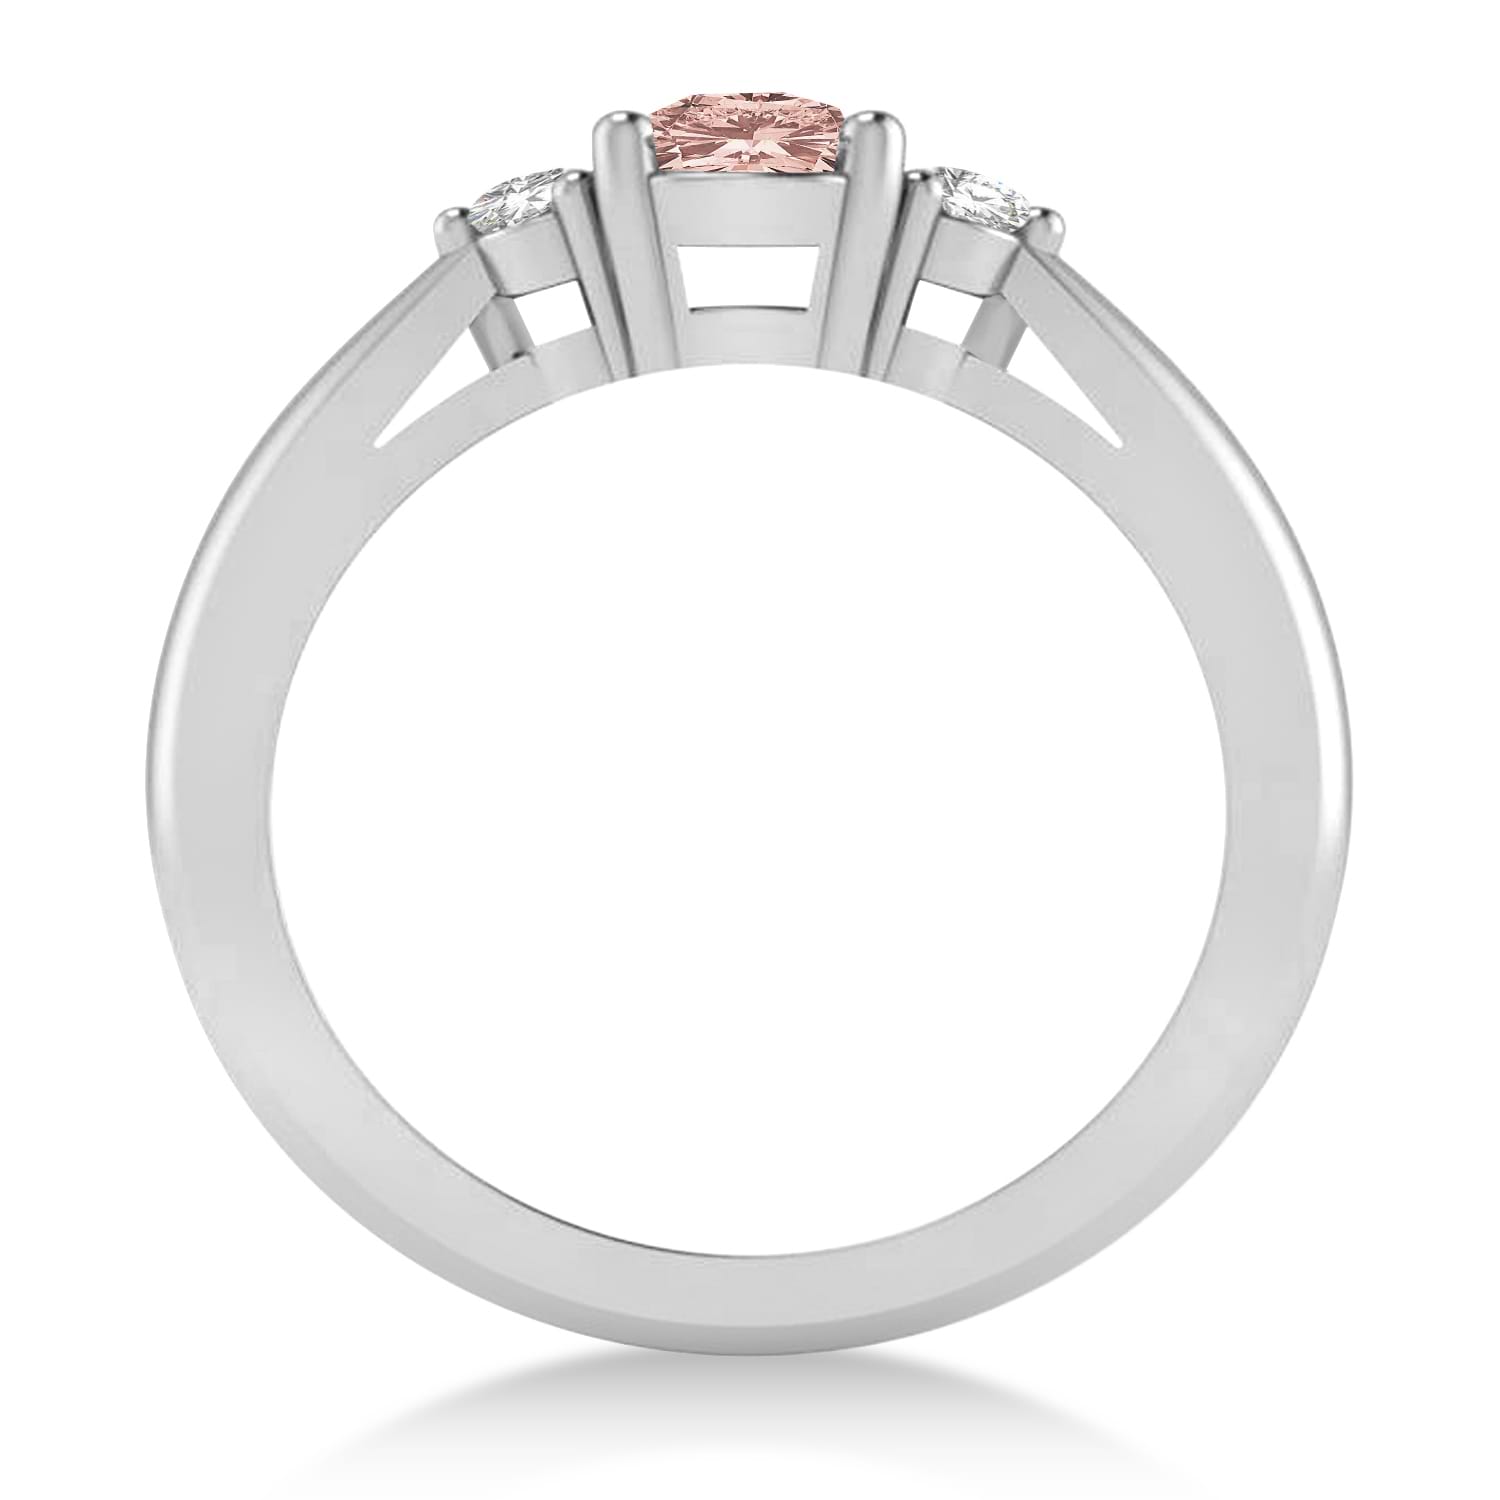 Cushion Morganite & Diamond Three-Stone Engagement Ring 14k White Gold (1.14ct)